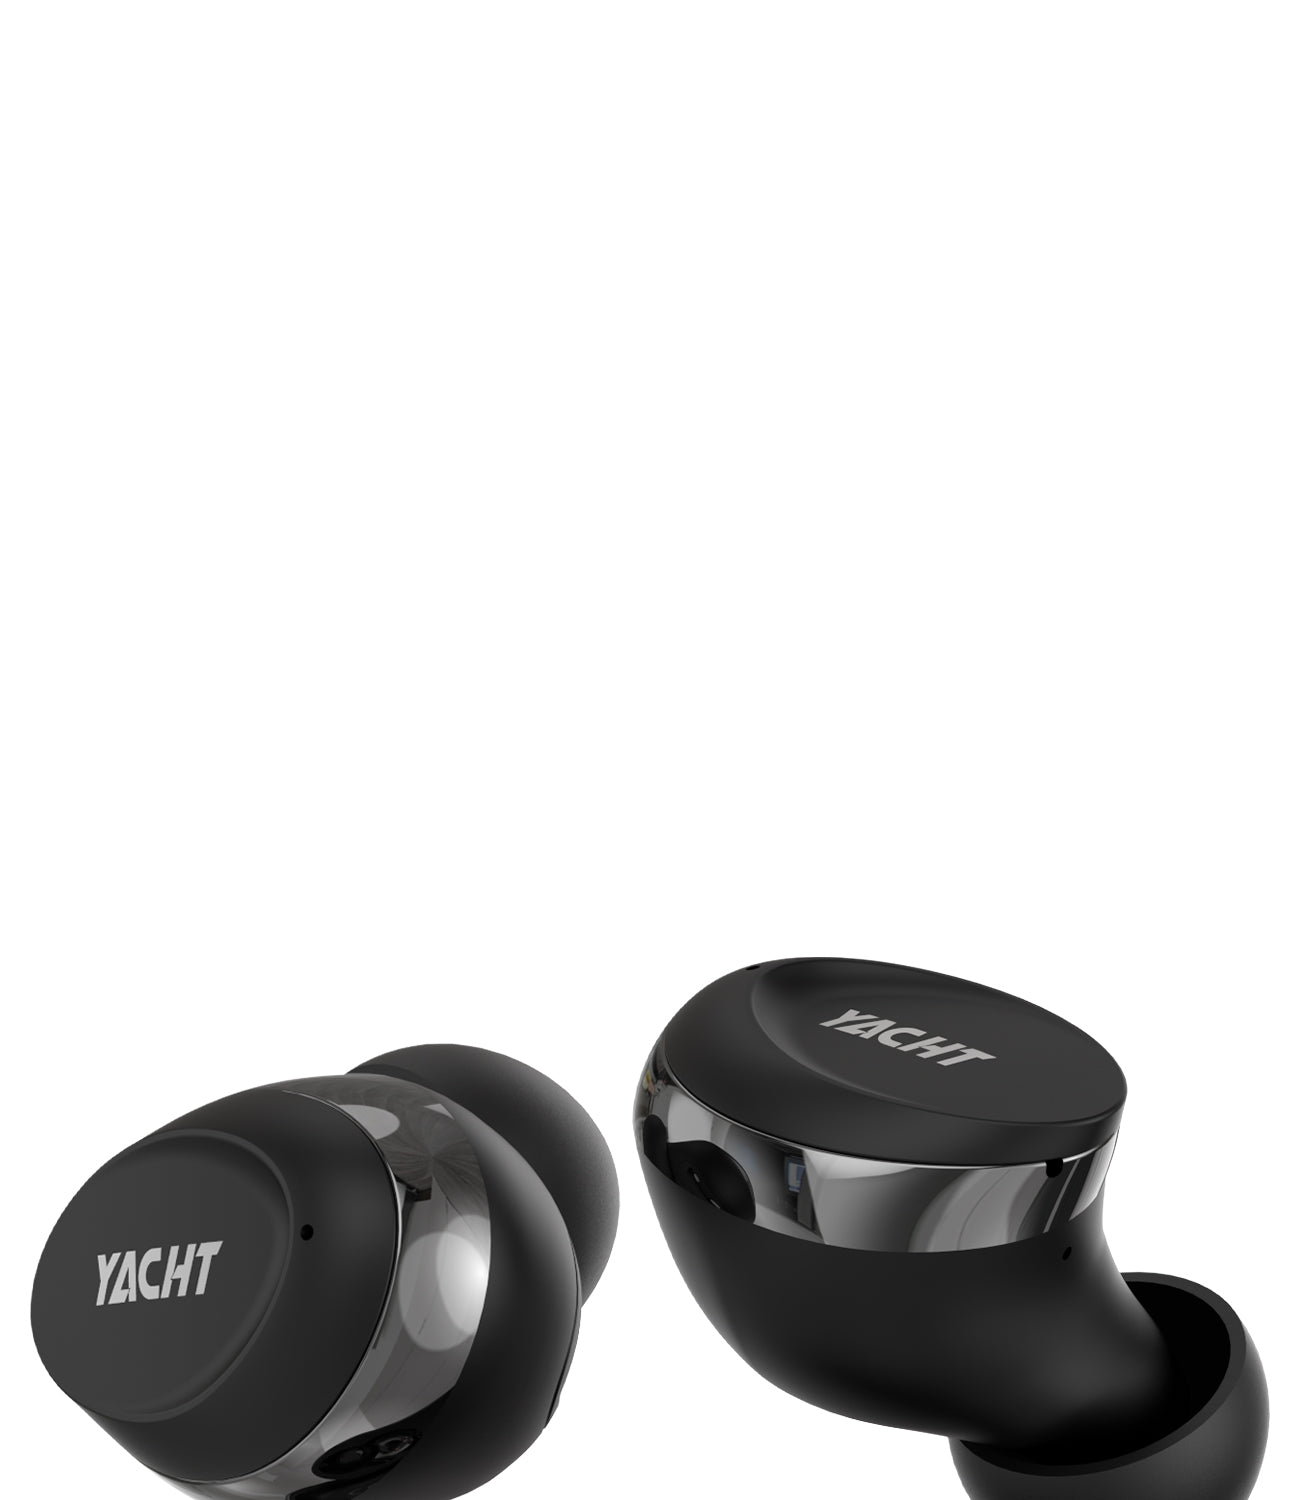 Wireless Earbuds- Buy best TWS Bluetooth earbuds Online | HiFuture